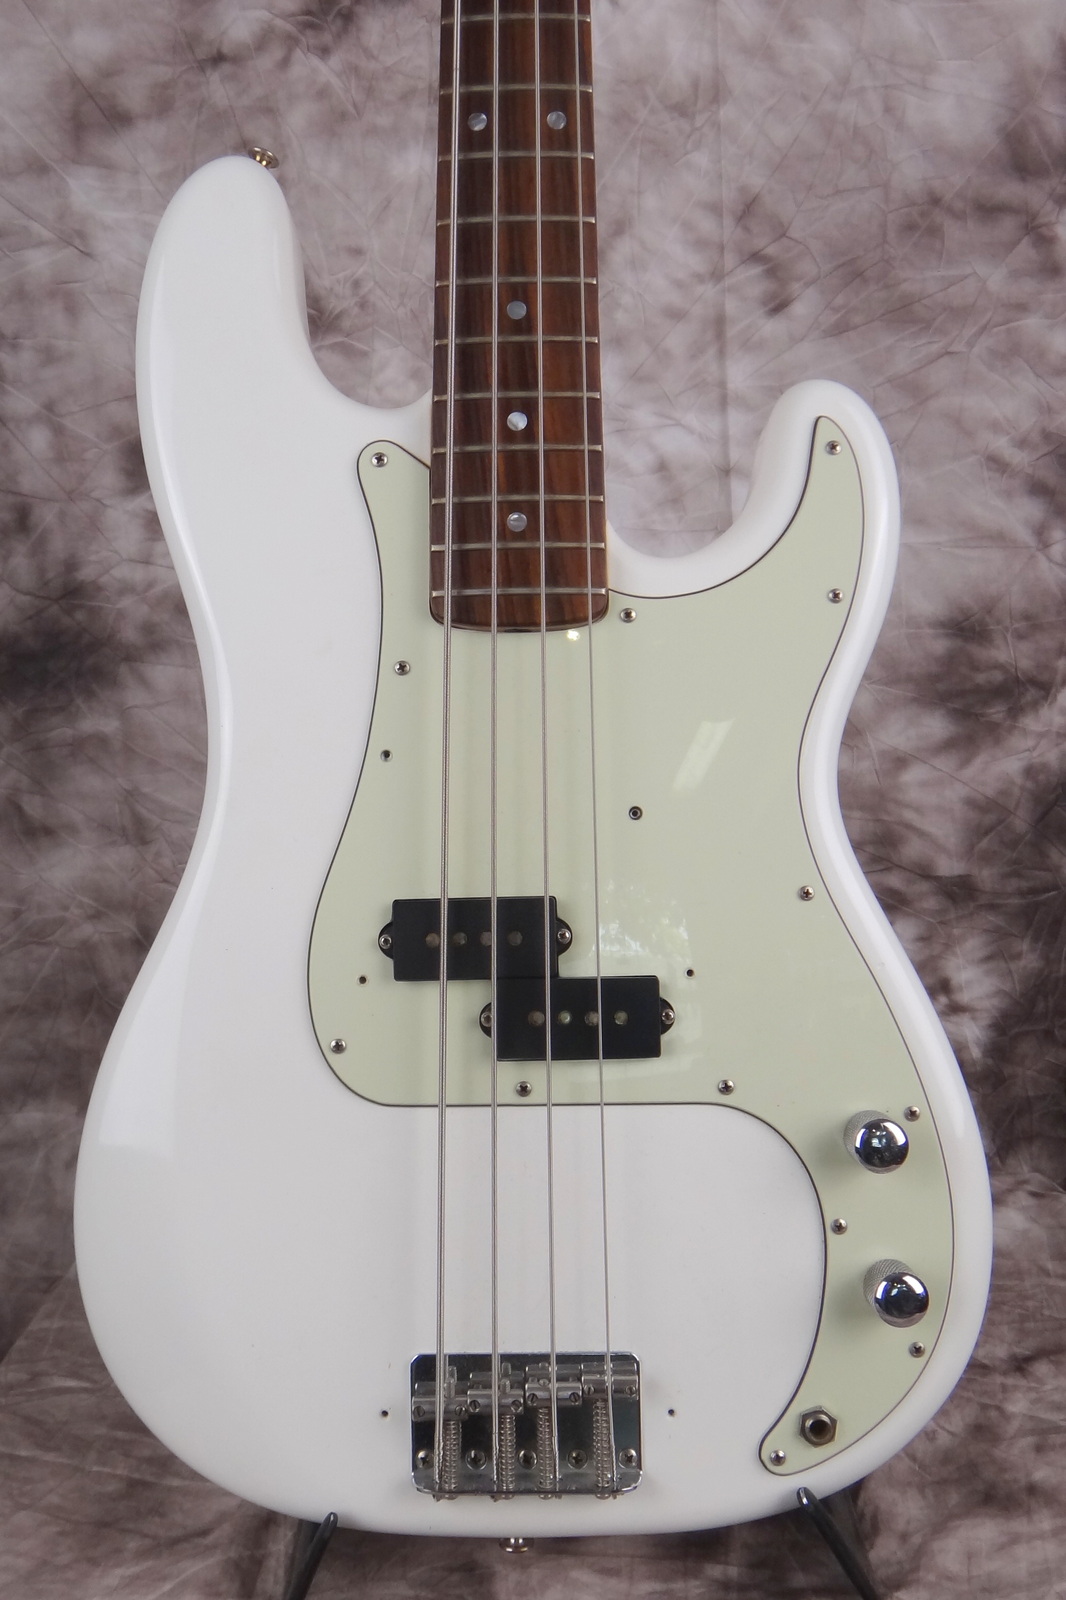 Fender-Precision-Bass_1978_white-refinish-002.JPG